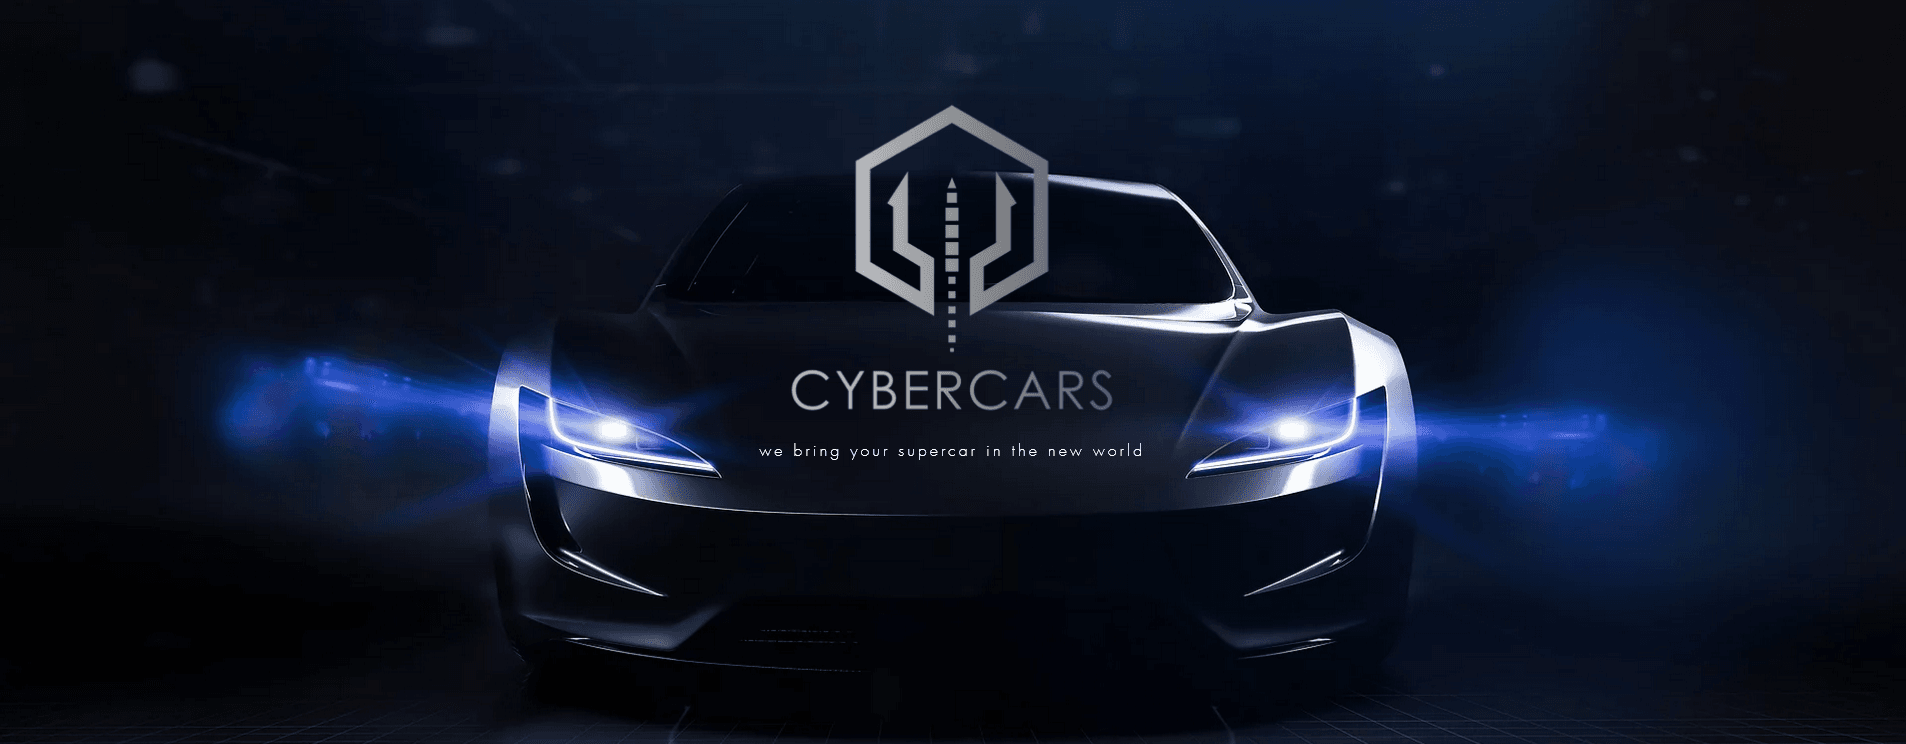 CyberCar banner